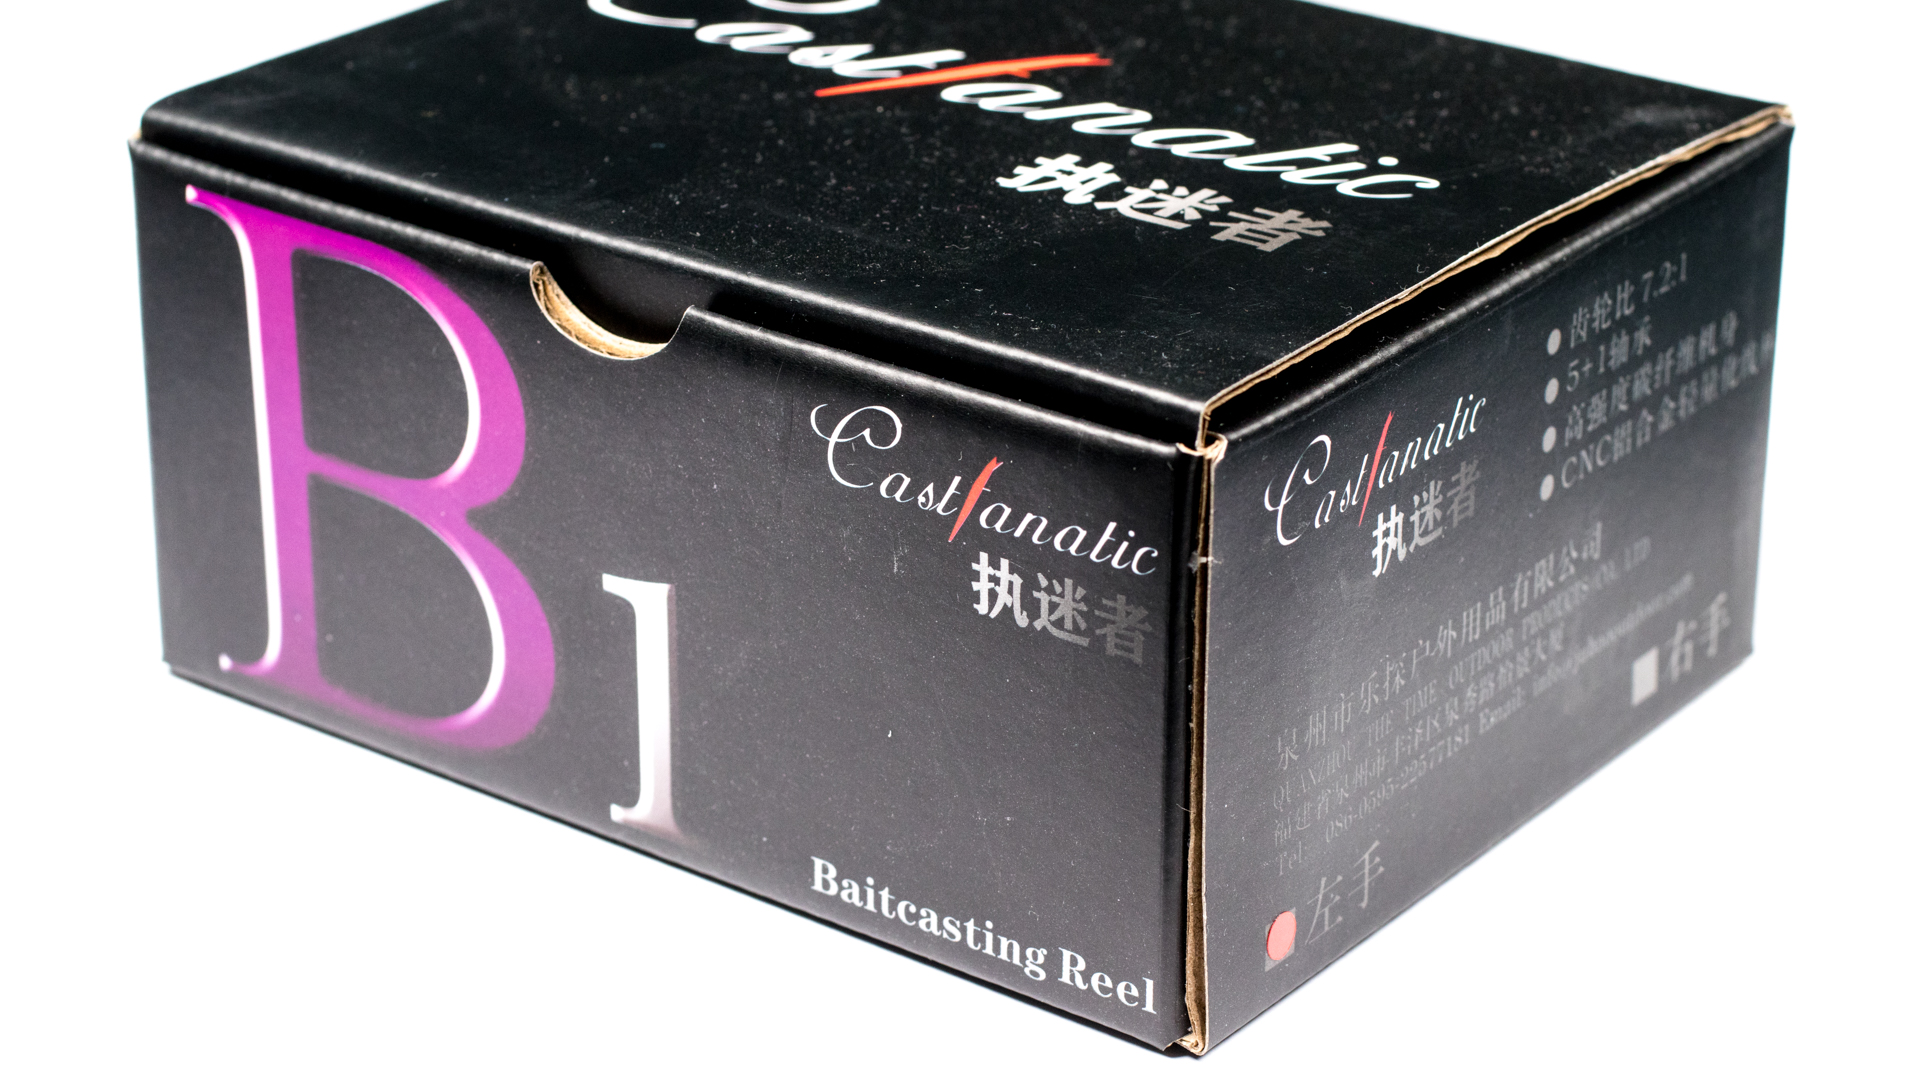 Castfanatic B1 supplied in a simple box